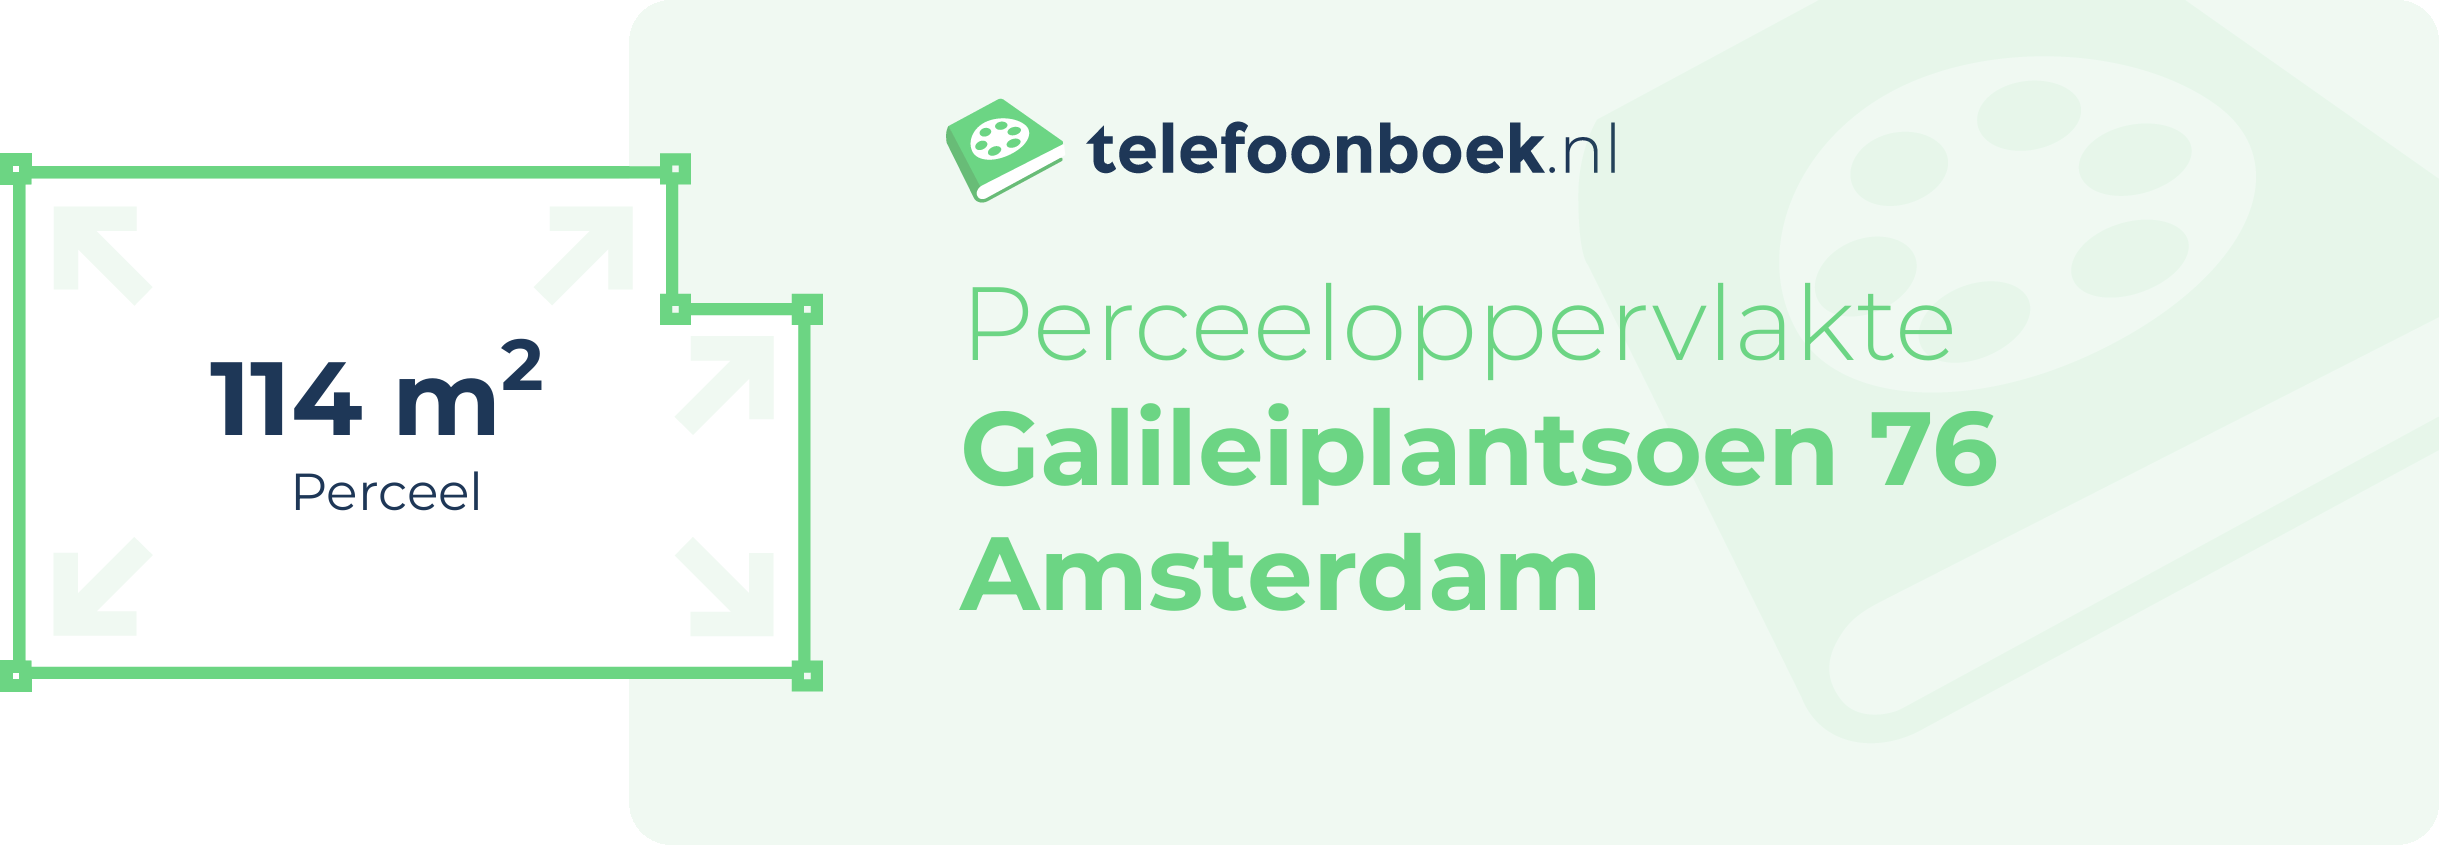 Perceeloppervlakte Galileiplantsoen 76 Amsterdam